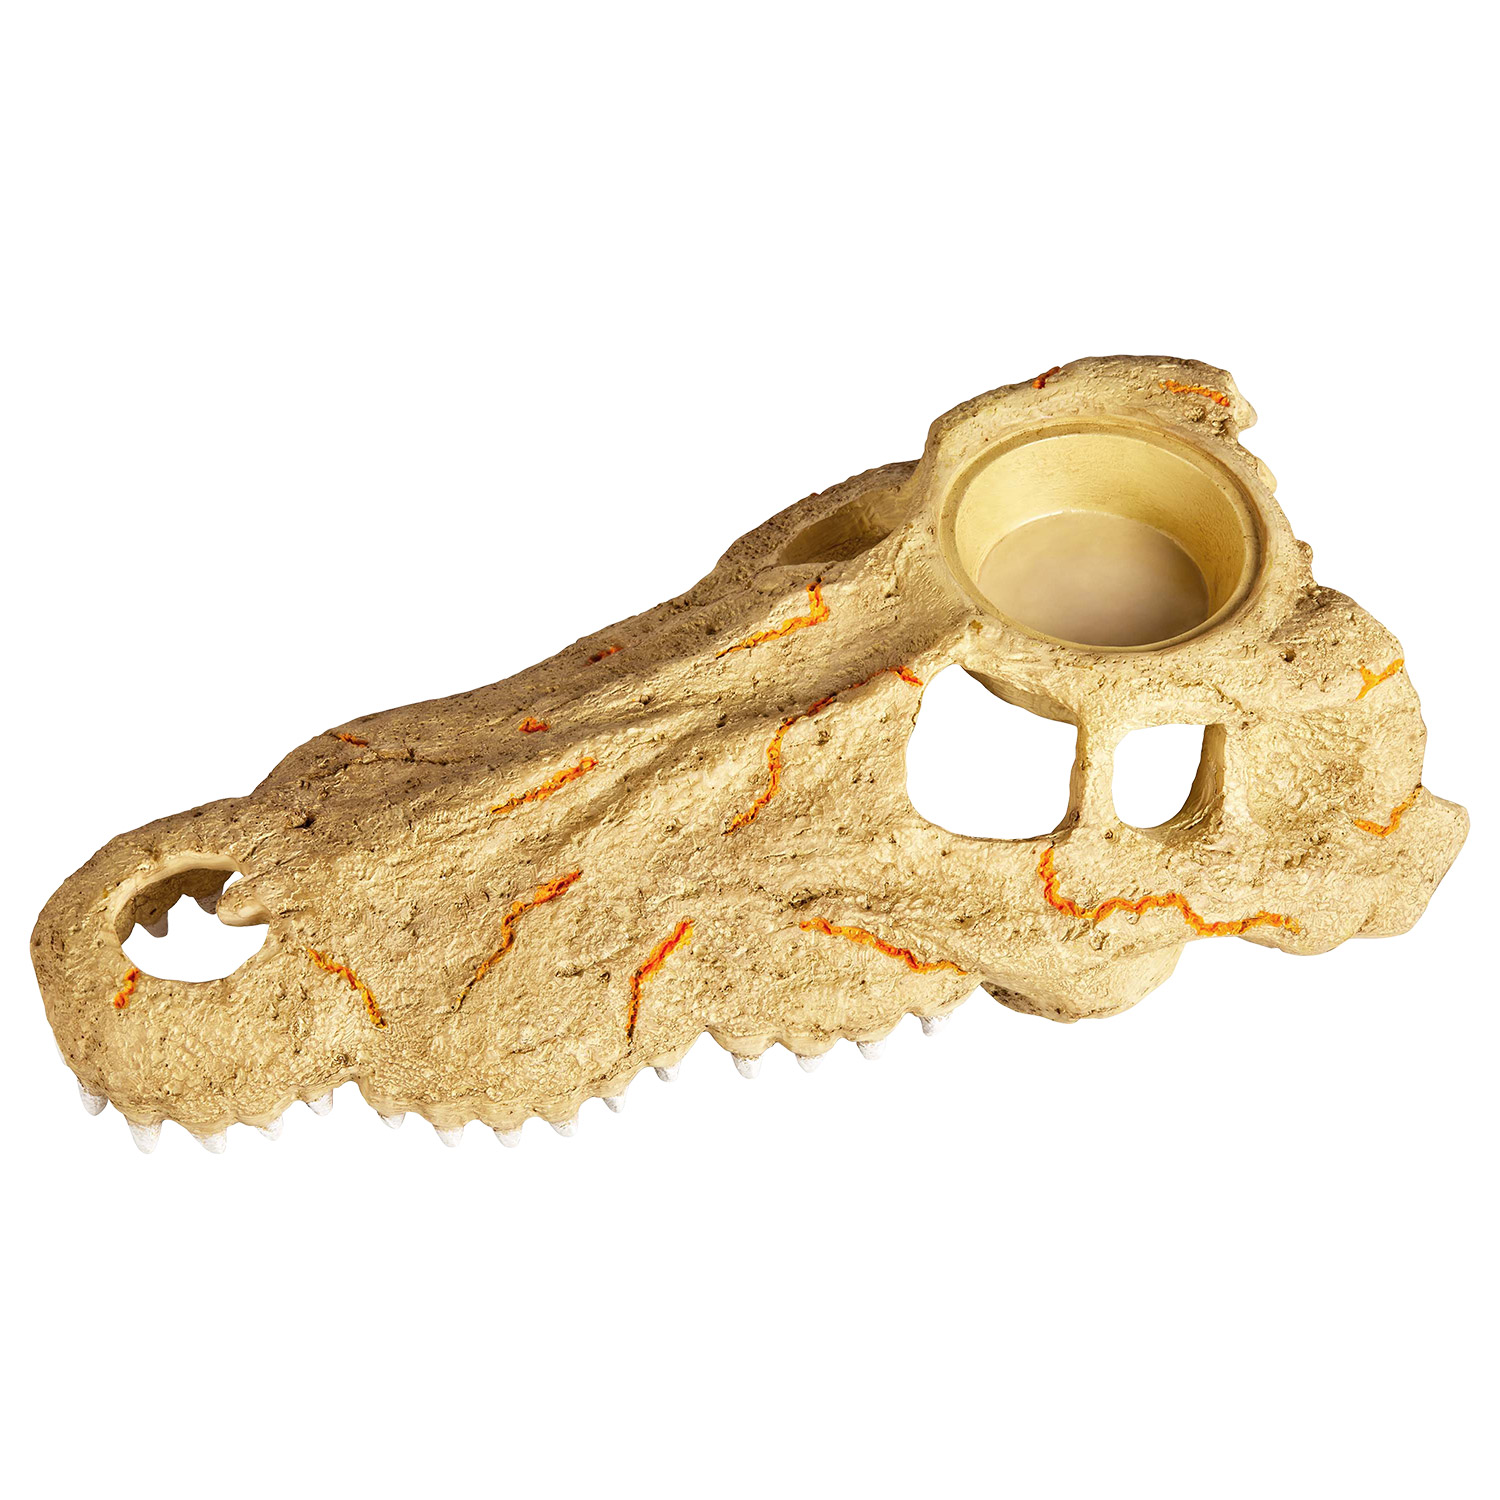 Zilla Grand crâne de crocodile - Rapid Sense Decor - Crocodile Skull - Large